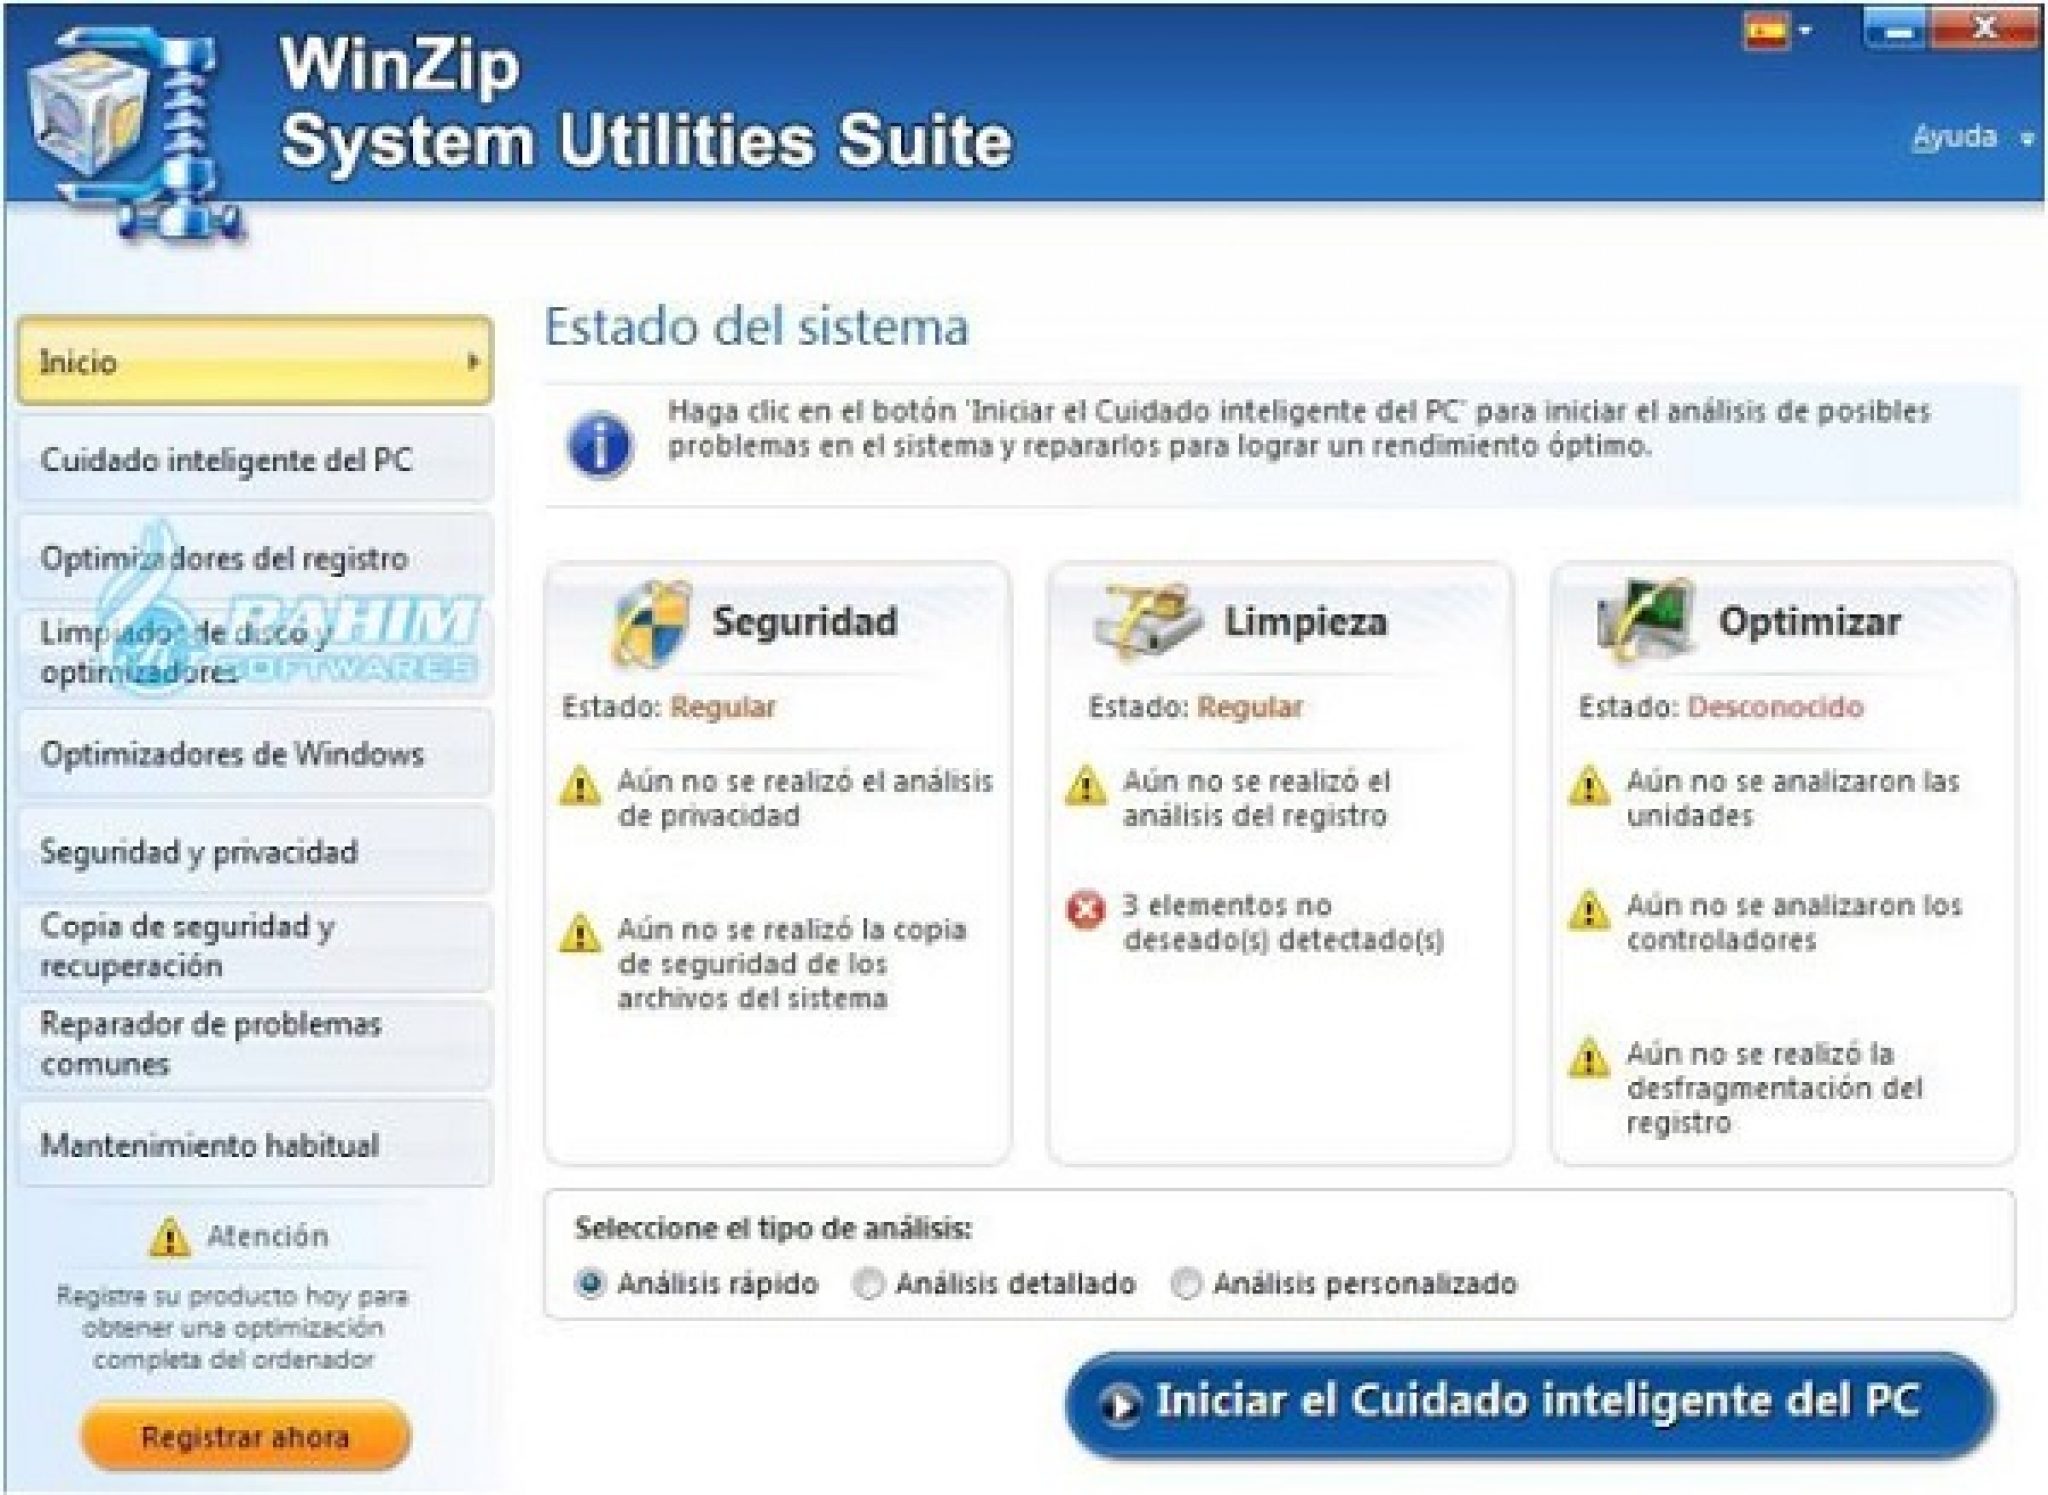 winzip system utilities suite phone number